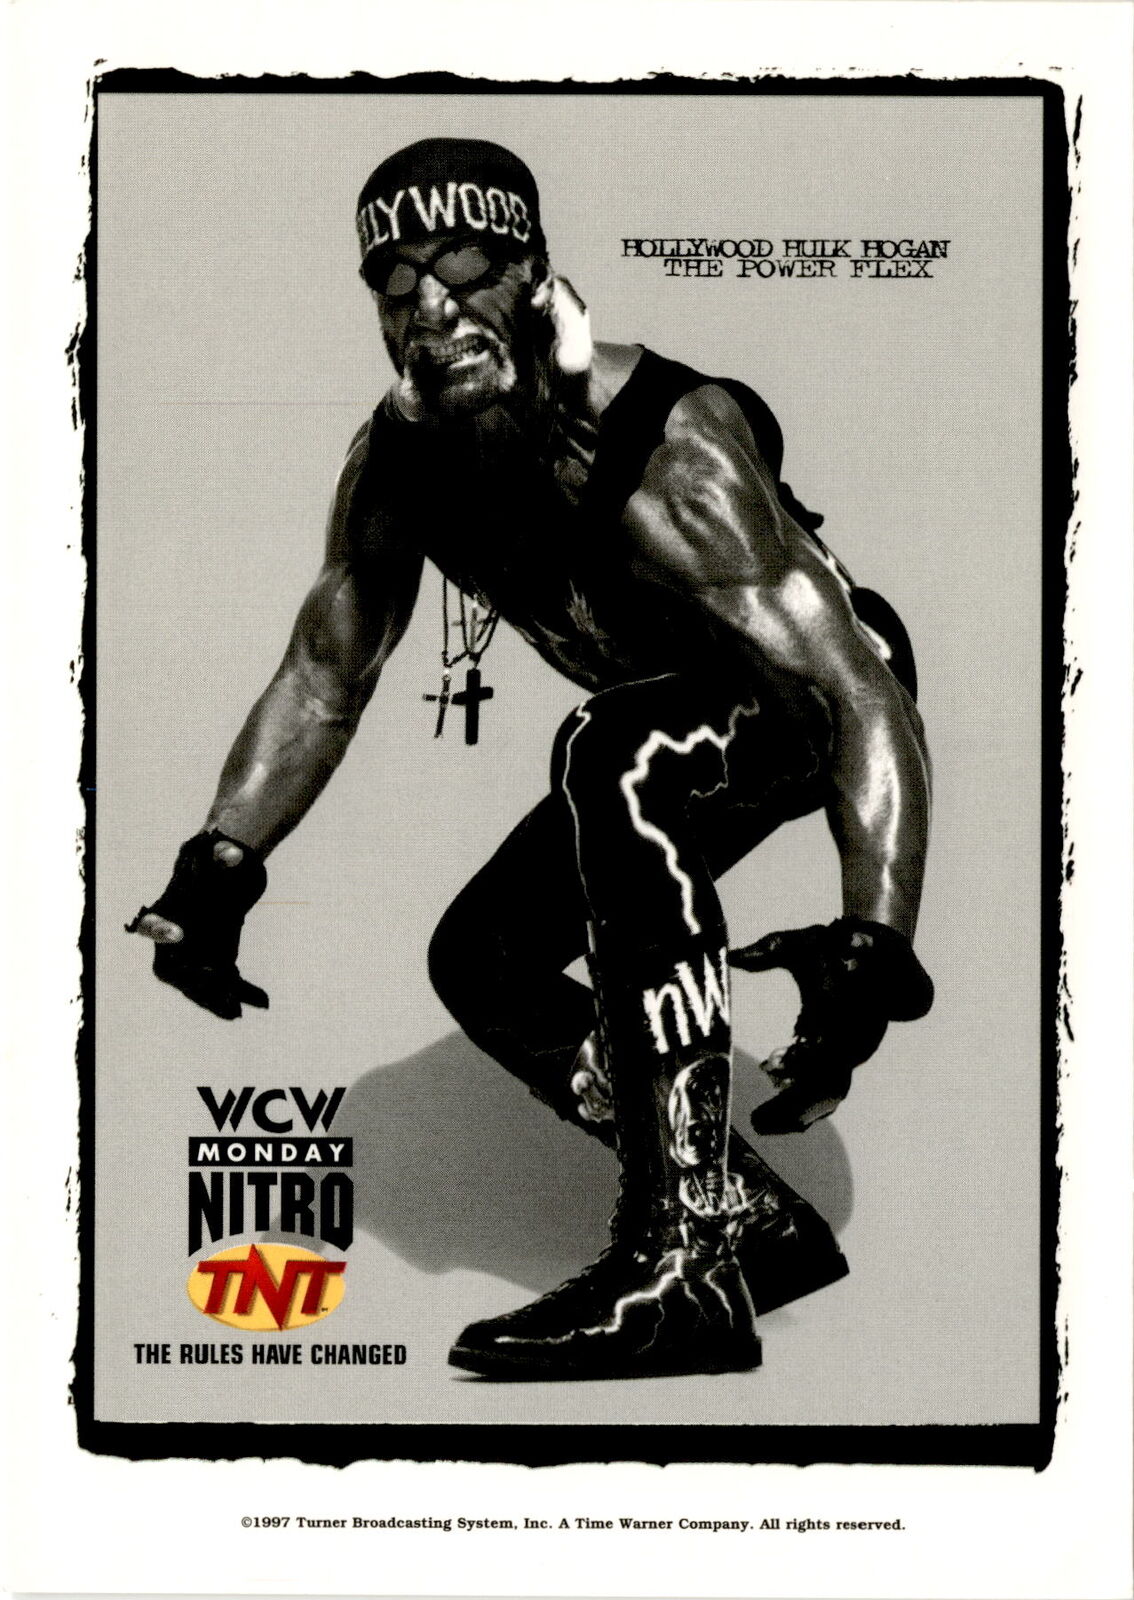 WCW Monday Nitro on TNT Hollywood Hulk Hogan Power Flex nW eBay